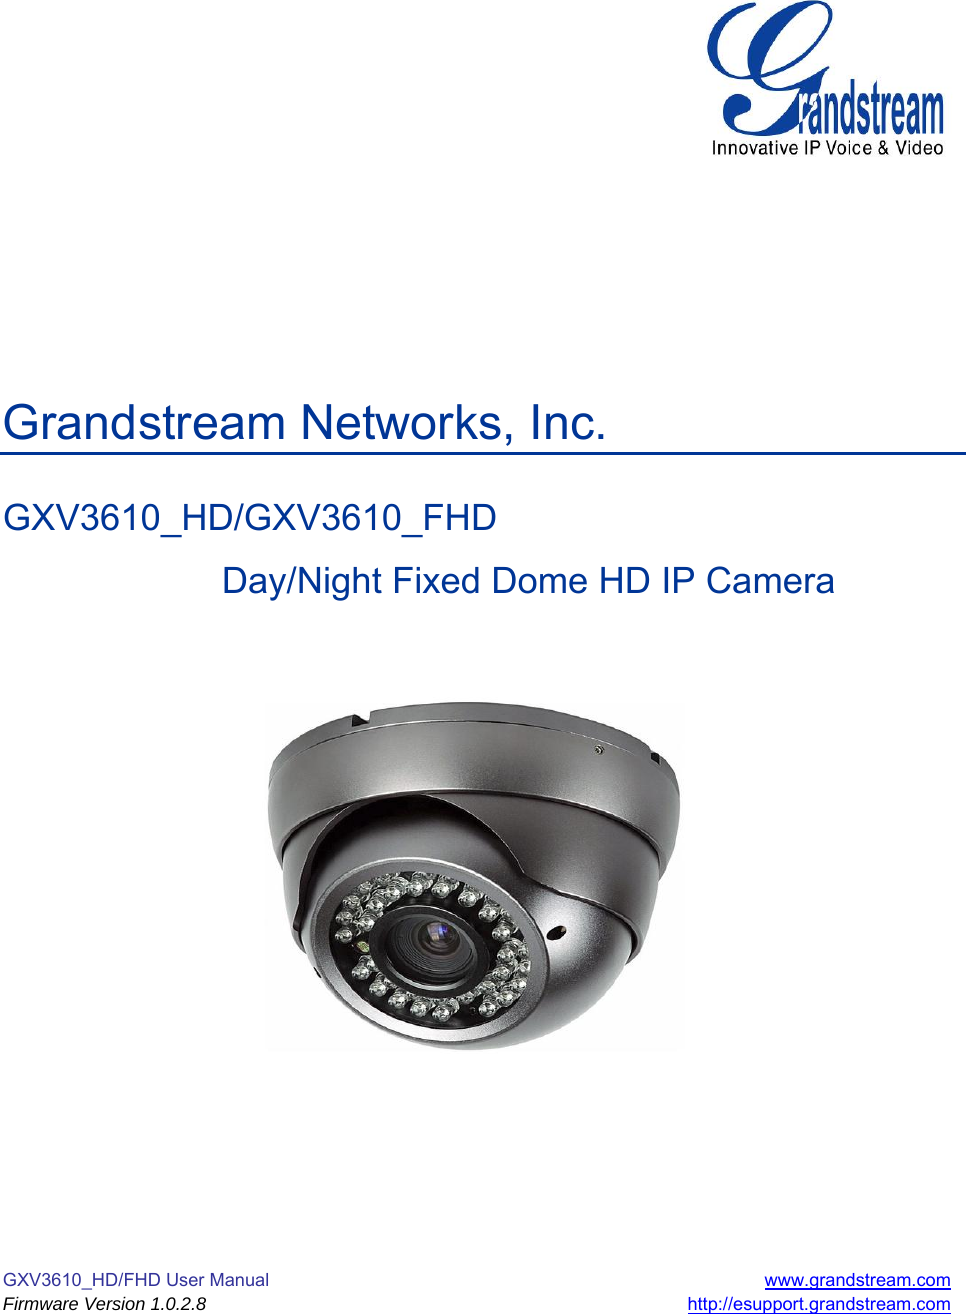 GXV3610_HD/FHD User Manual  www.grandstream.com Firmware Version 1.0.2.8 http://esupport.grandstream.com             Grandstream Networks, Inc.  GXV3610_HD/GXV3610_FHD        Day/Night Fixed Dome HD IP Camera         